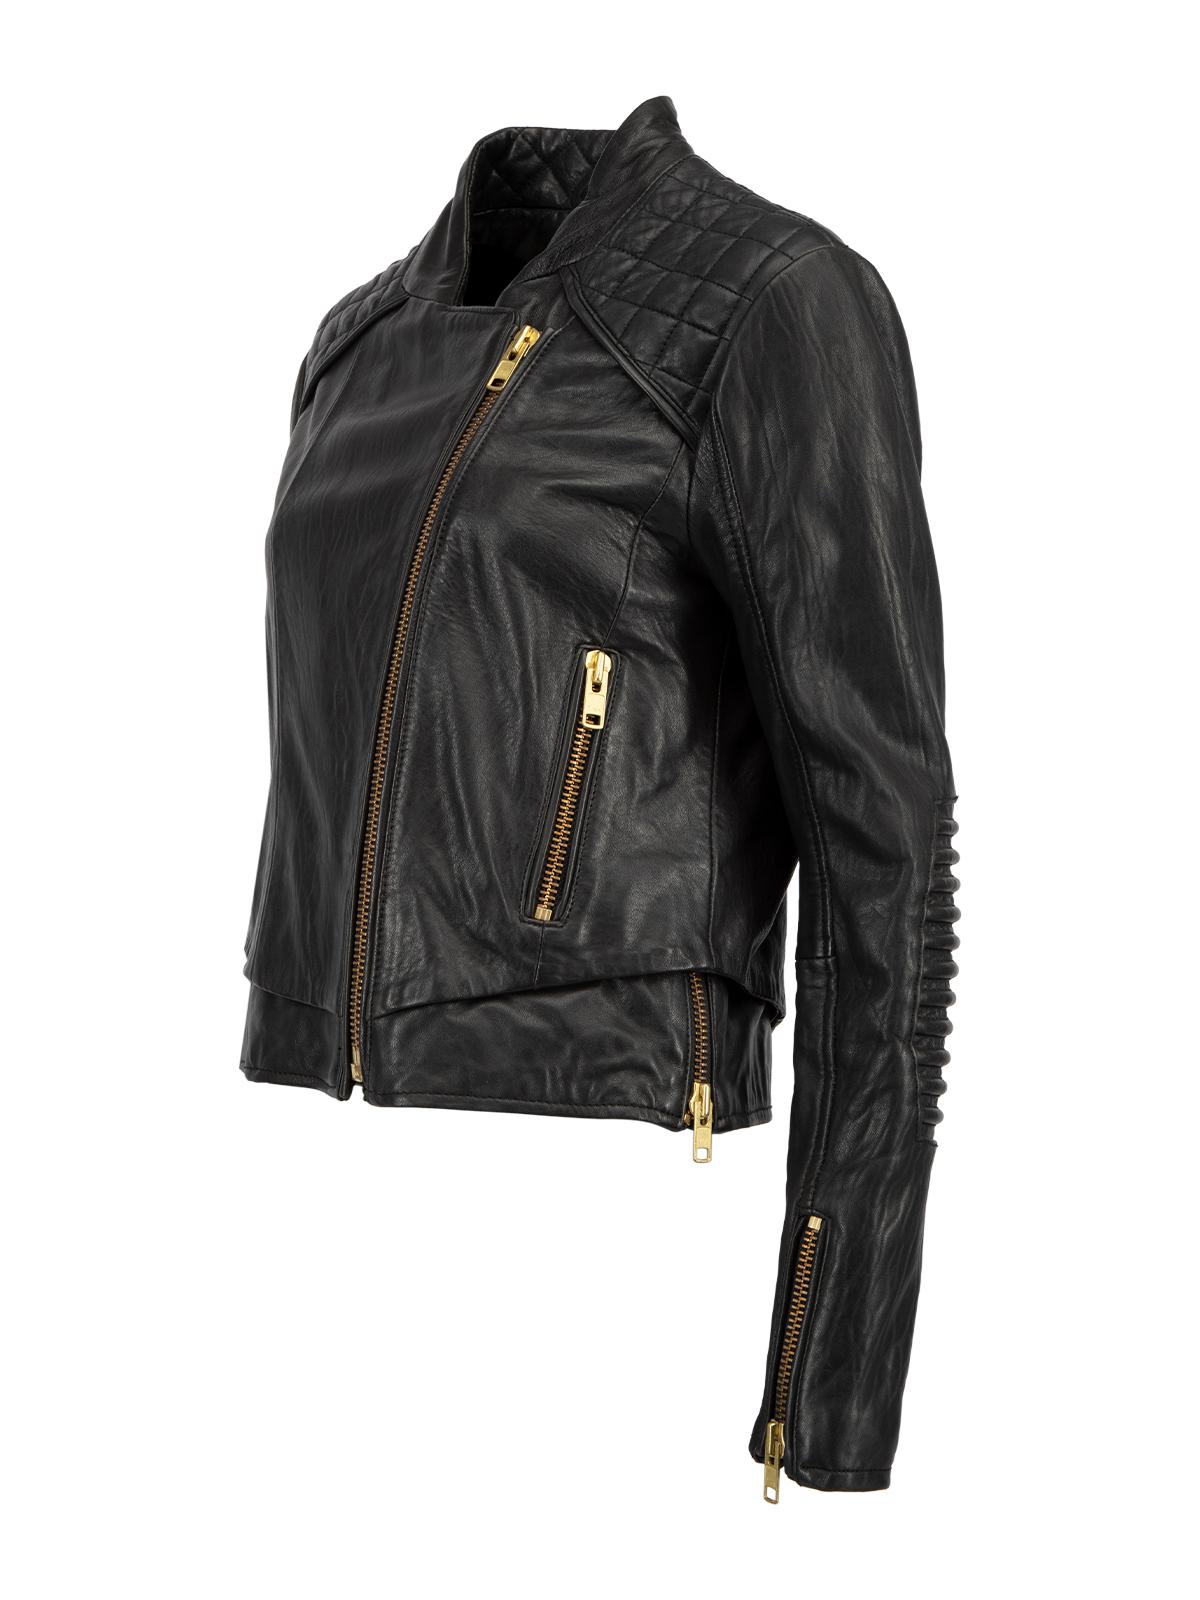 Pre-Loved The Kooples Women's Black Leather Quilted Biker Jacket 1